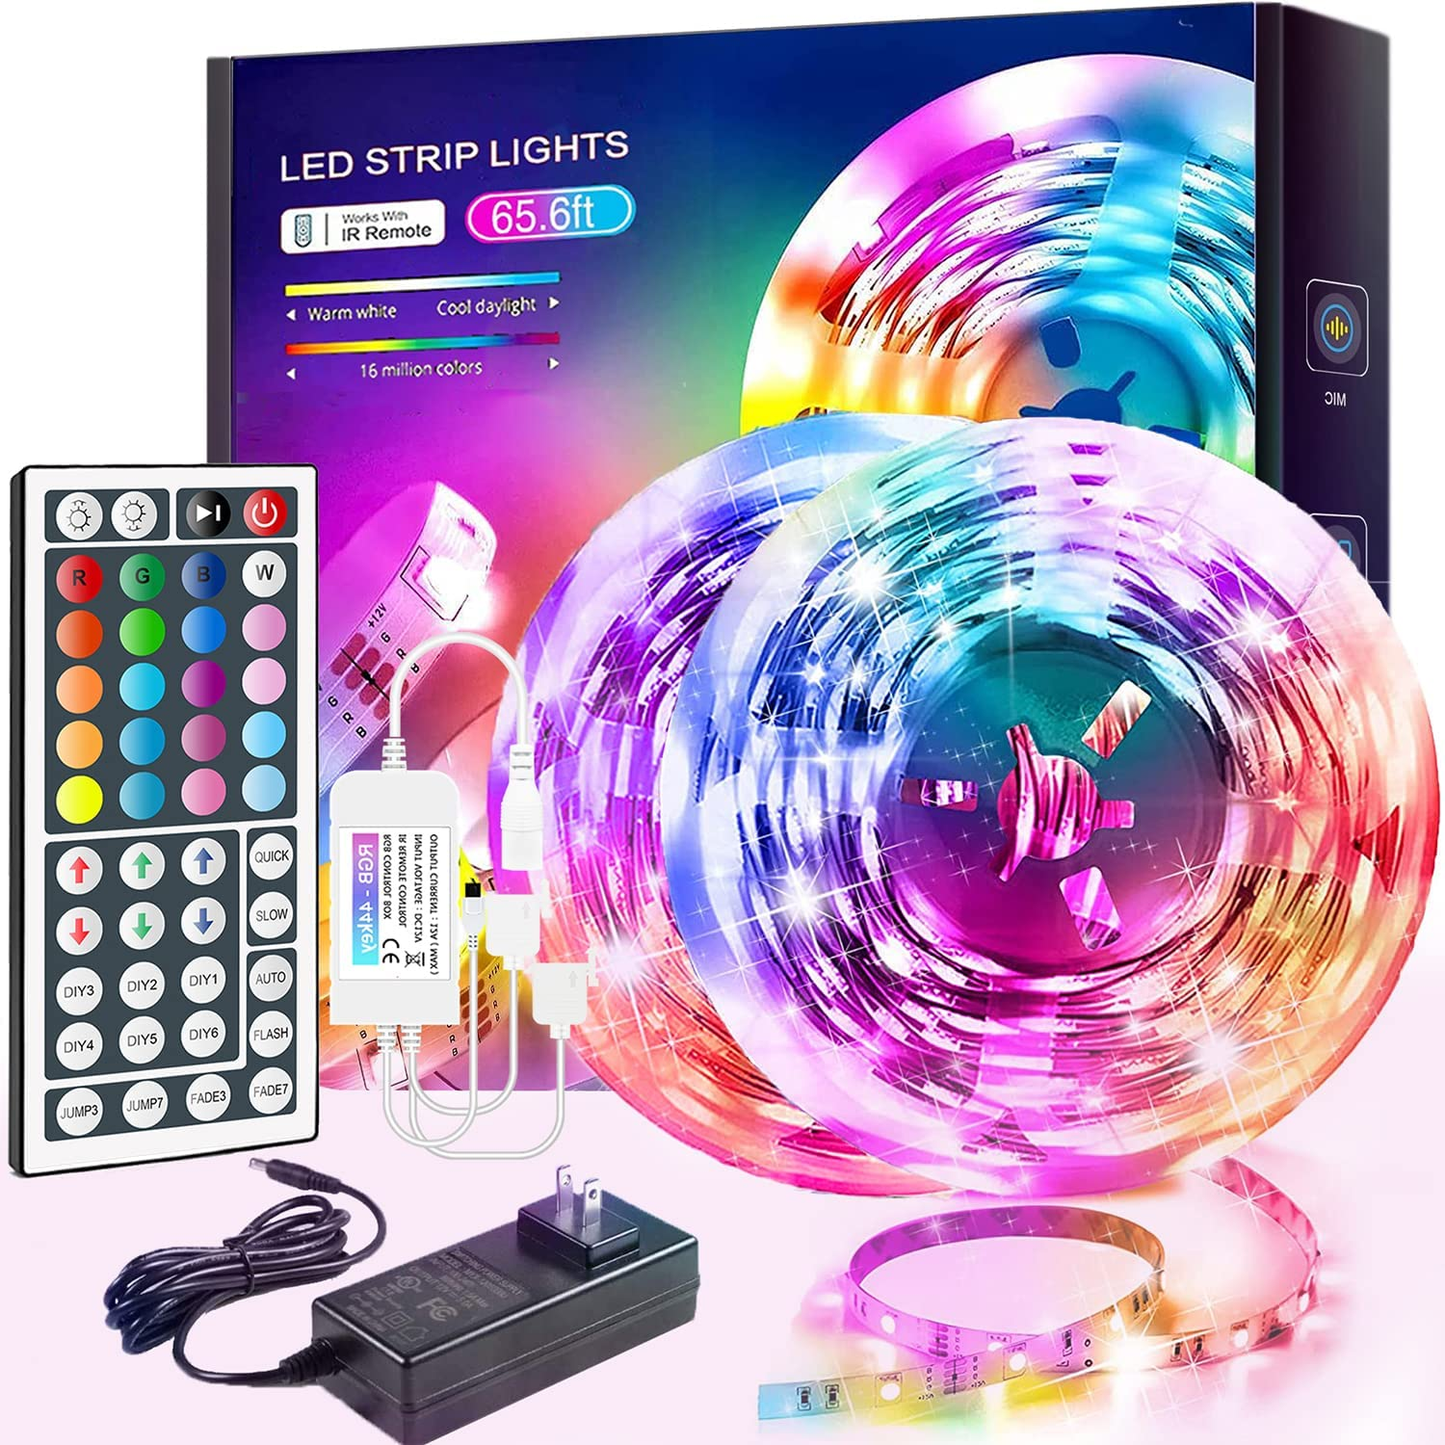 Led Strip Lights Color Changing RGB Led Light Strips with 44 Keys IR Remote Control, 20 Colors and DIY Mode LED Light Strip